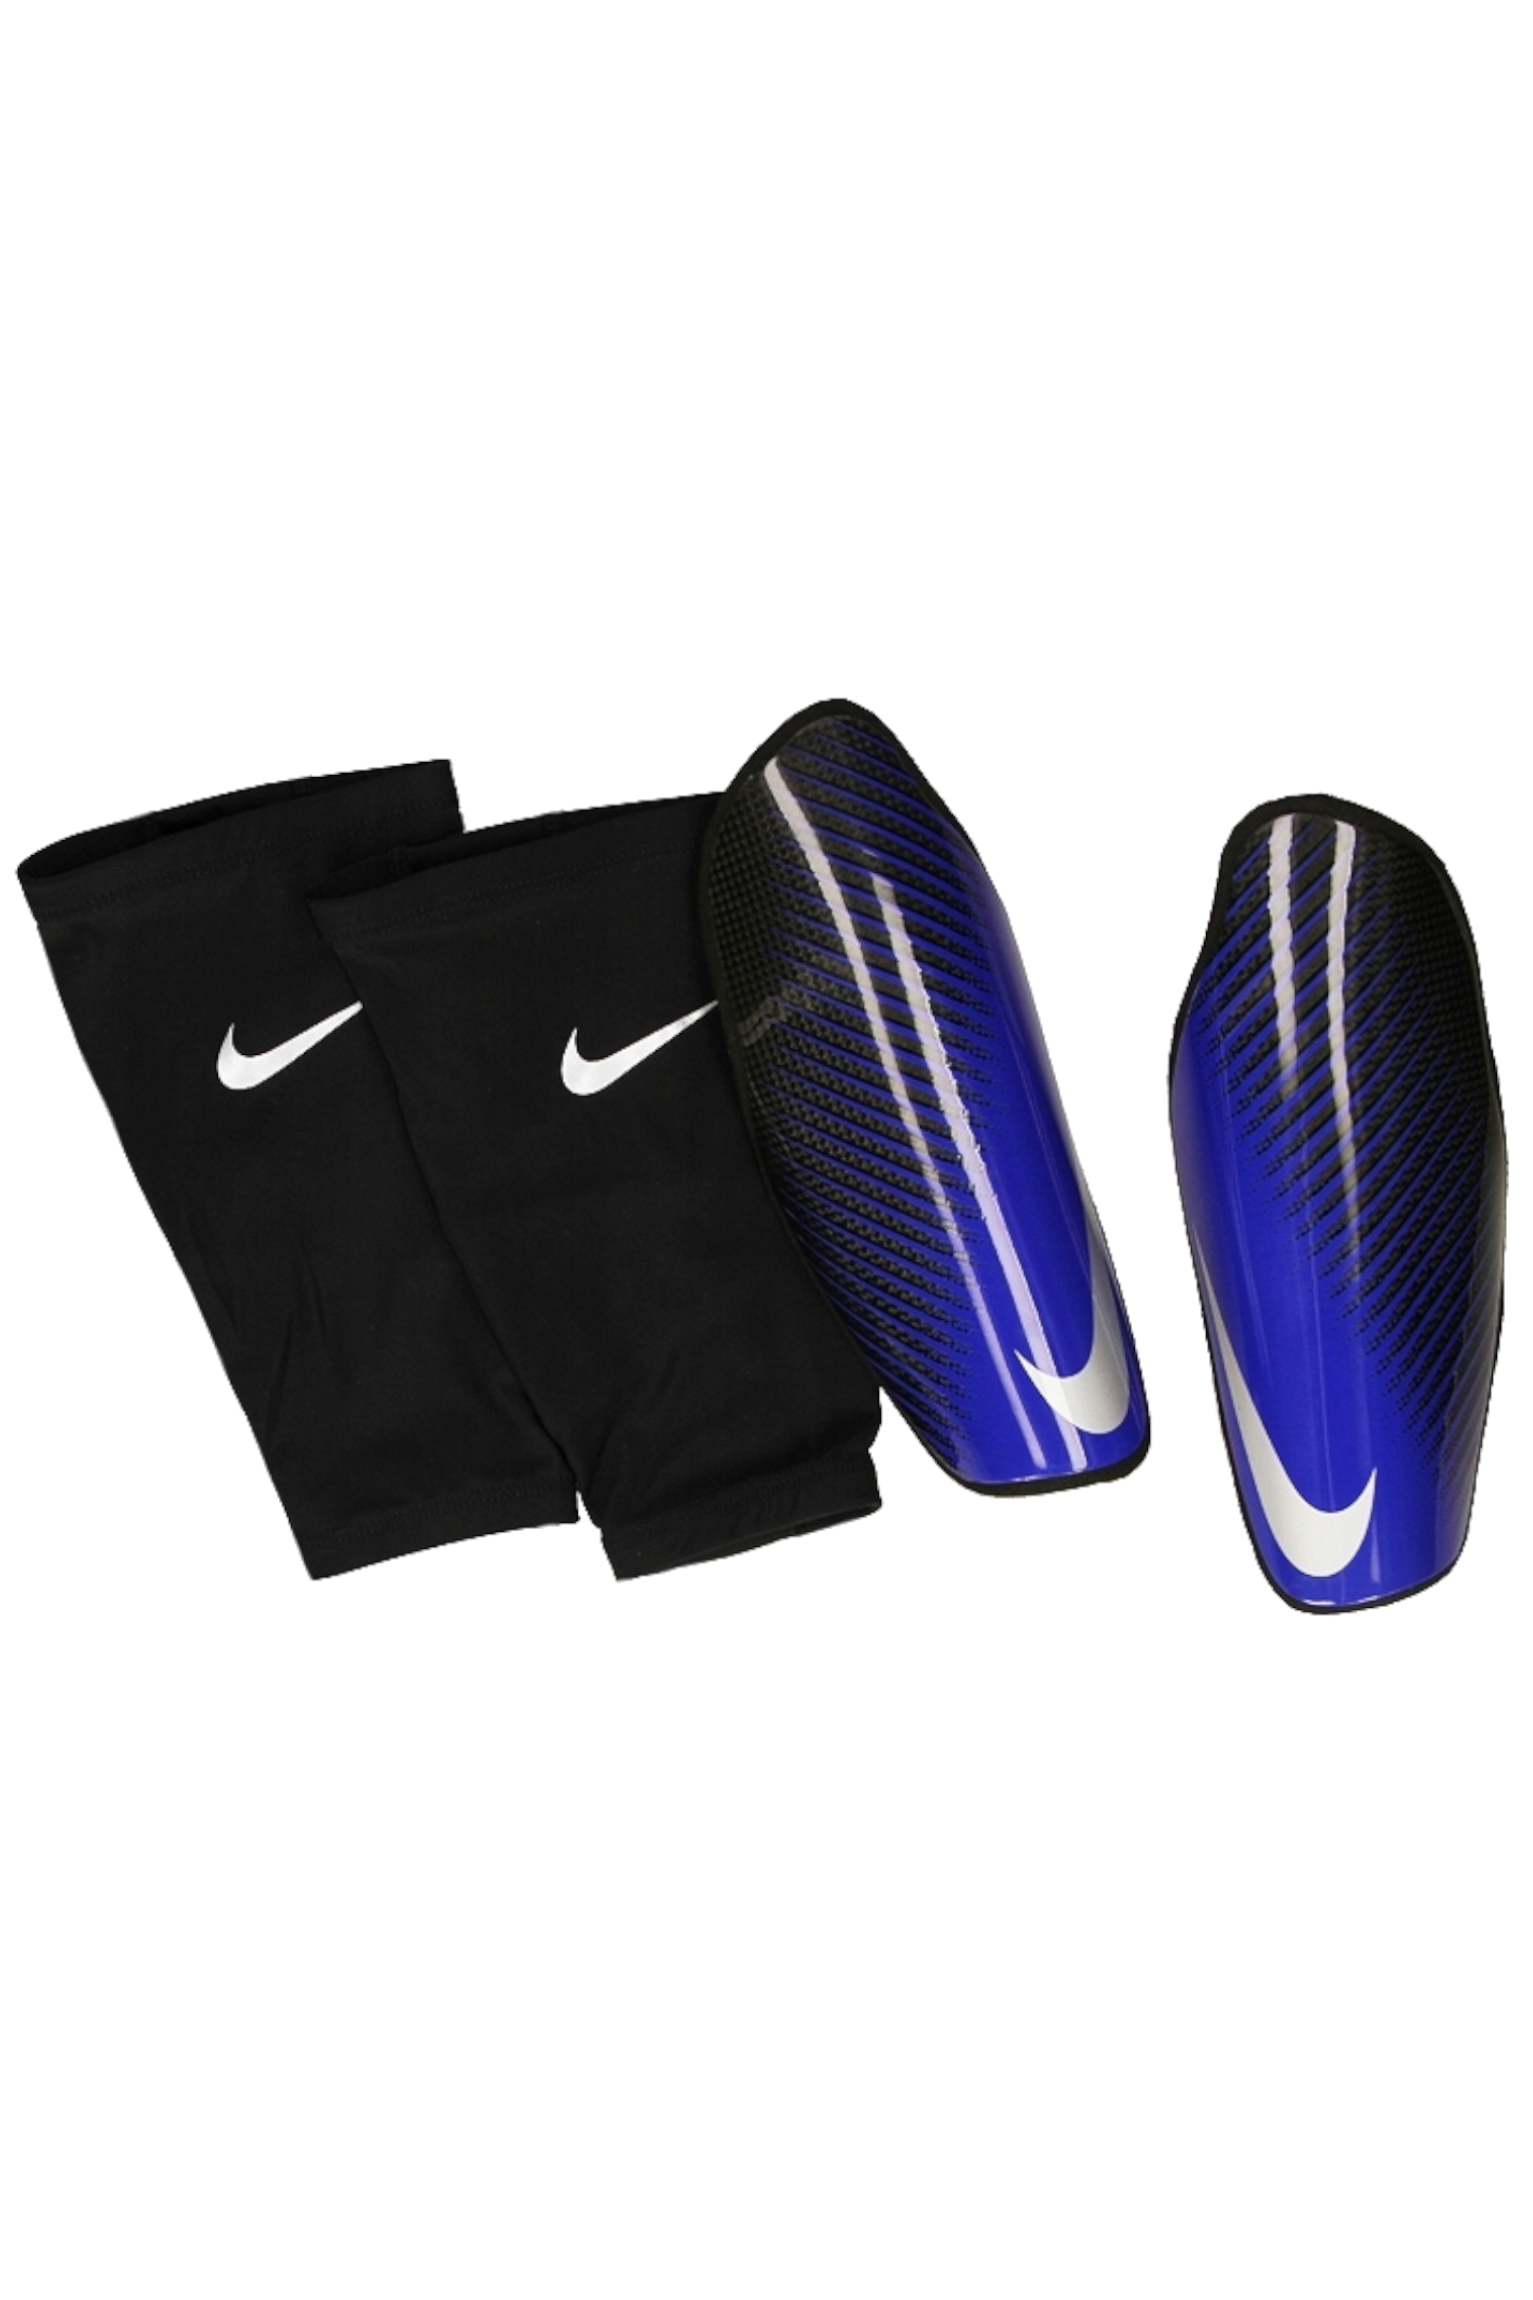 Shin Pads Nike Protegga Carbonite | R 